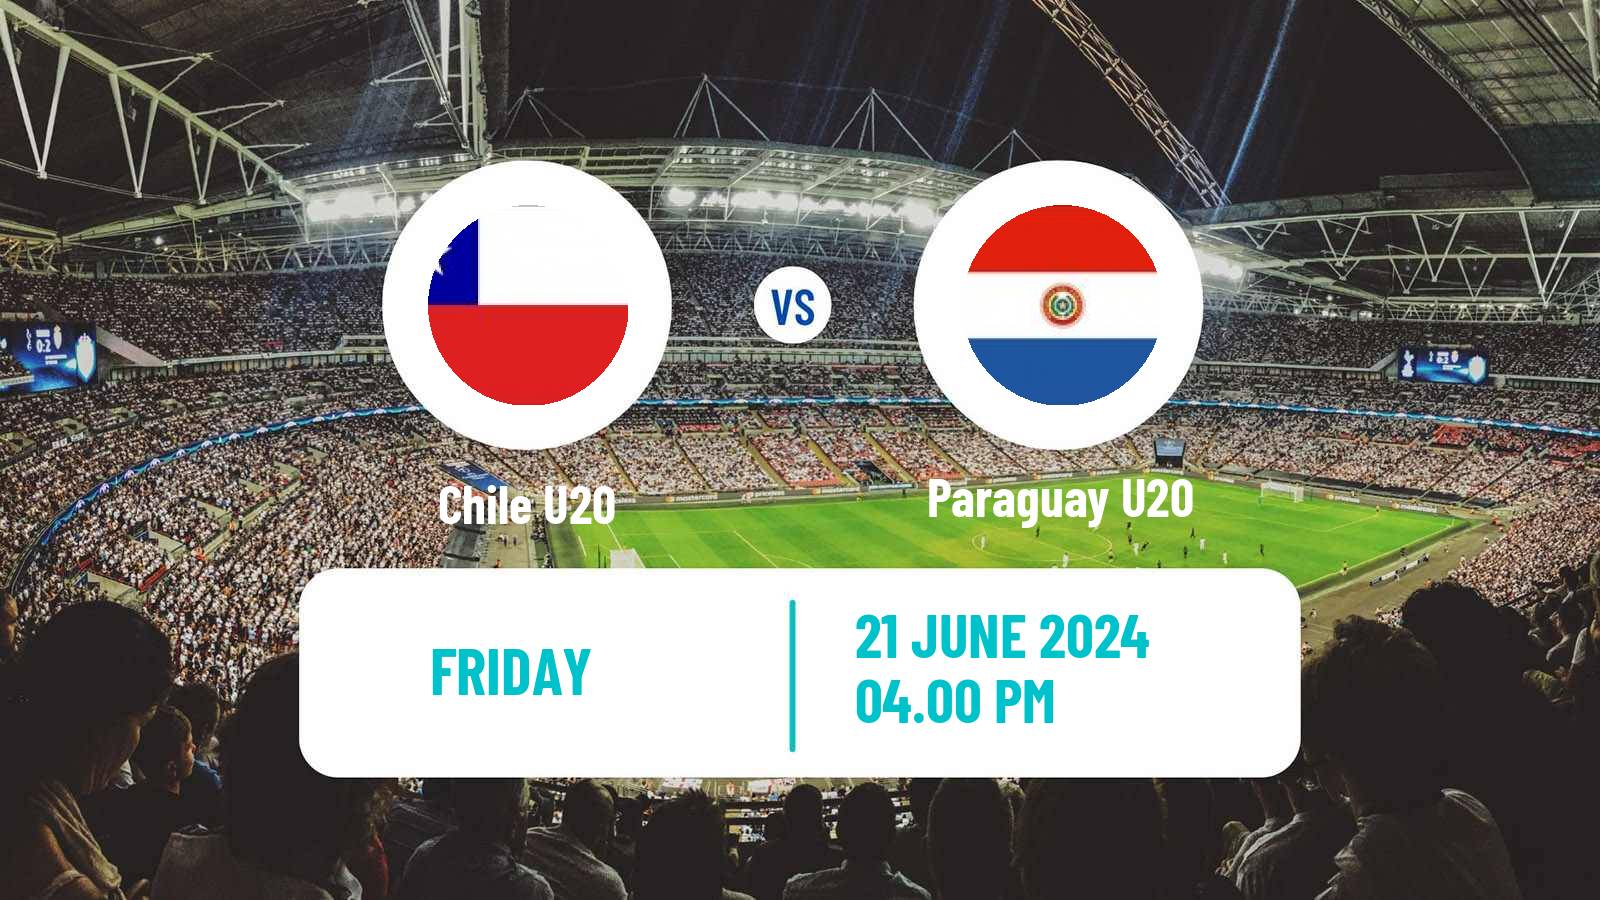 Soccer Friendly Chile U20 - Paraguay U20